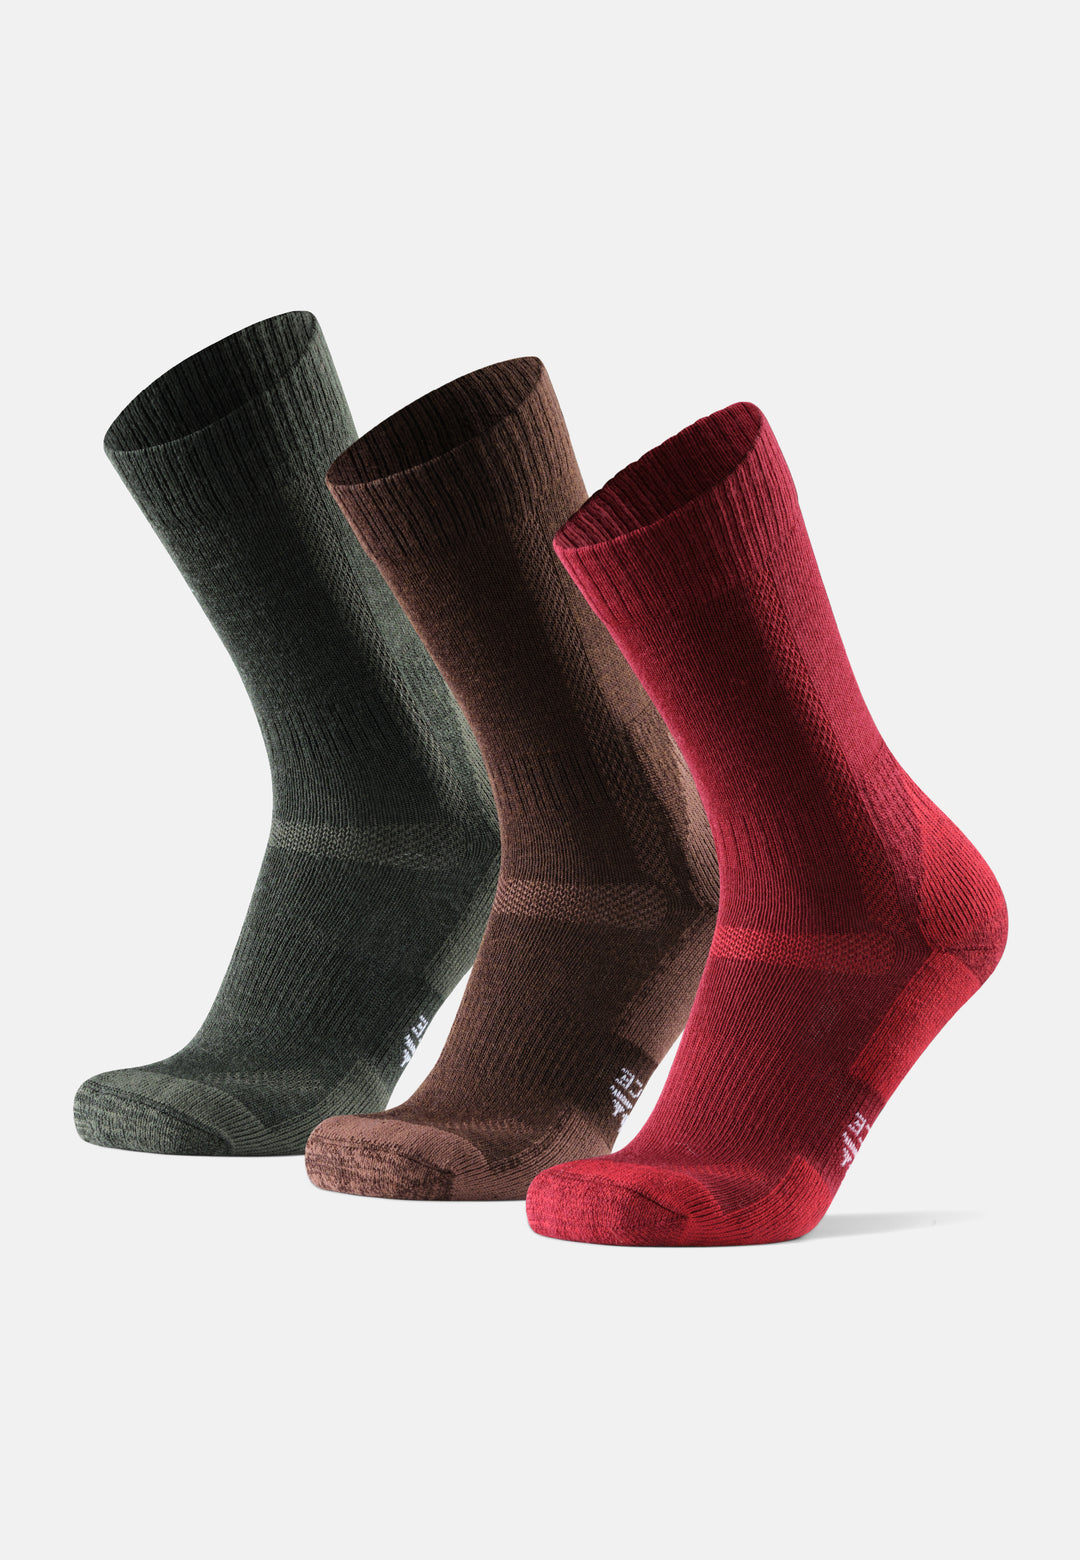 DANISH ENDURANCE Soft Thermal Socks with Non Slip Grip, Fleece Lined Warm  Socks